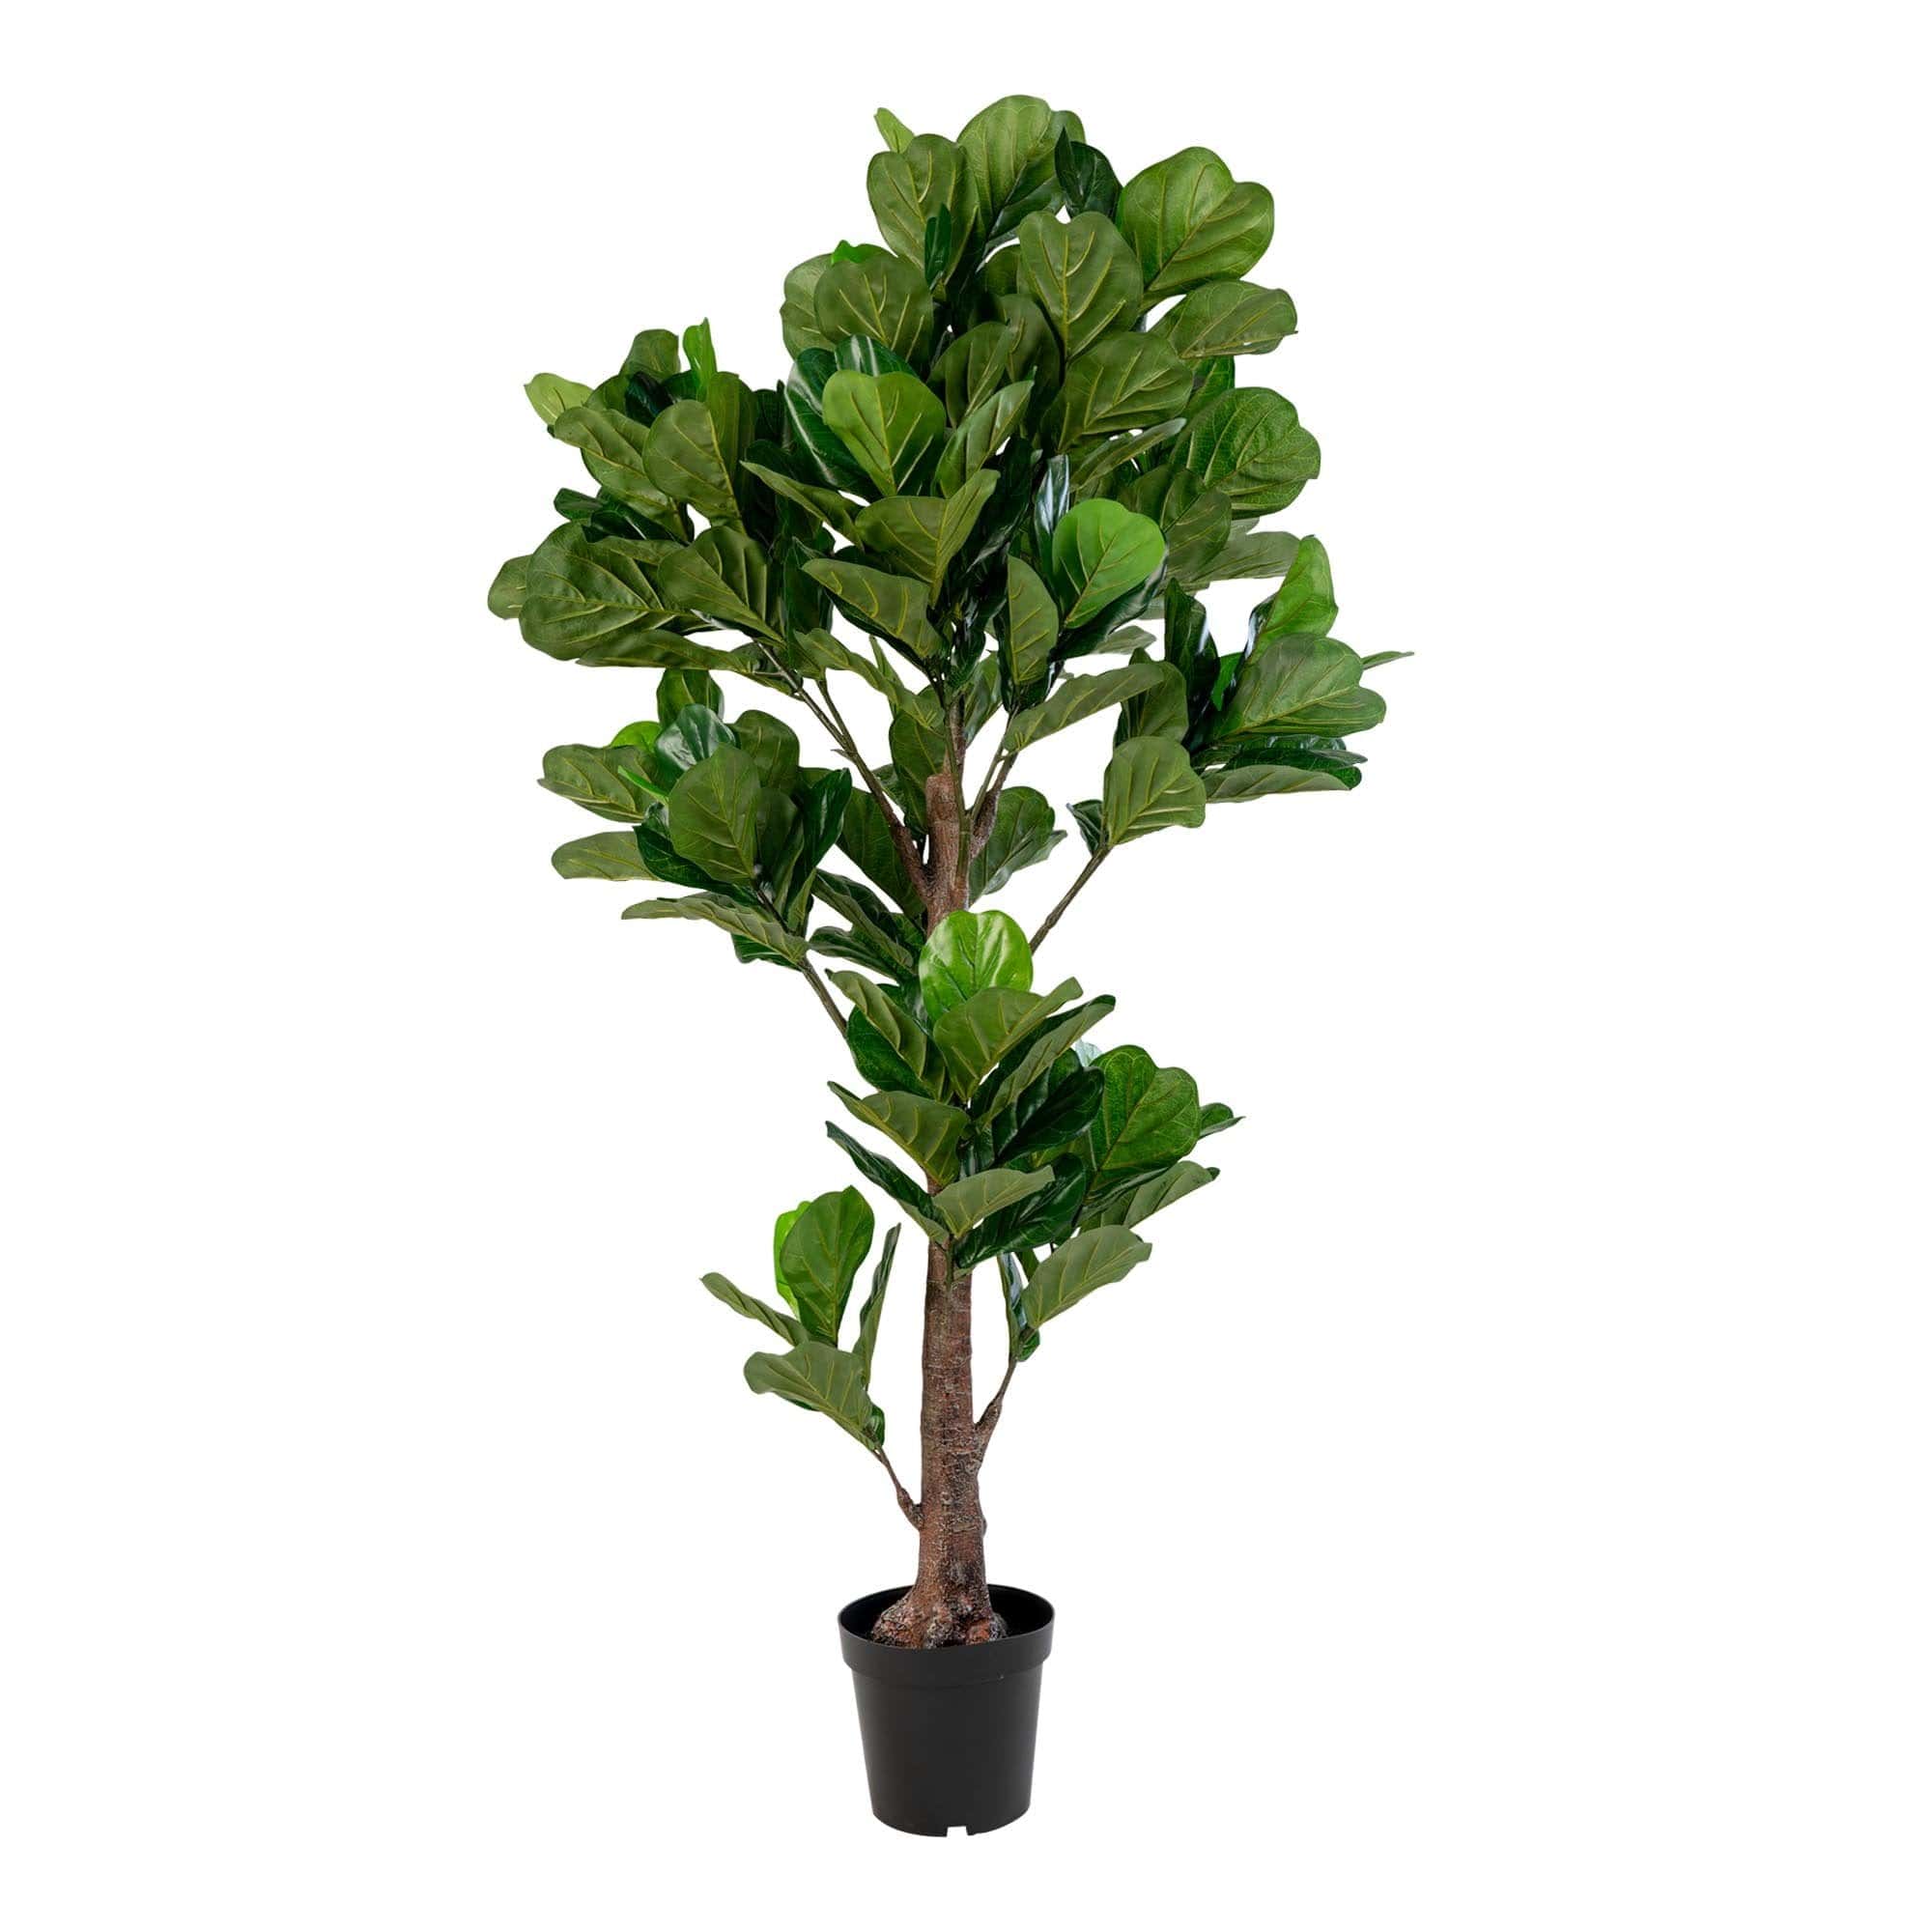 Kunst Vioolbladplant in pot van 190 cm